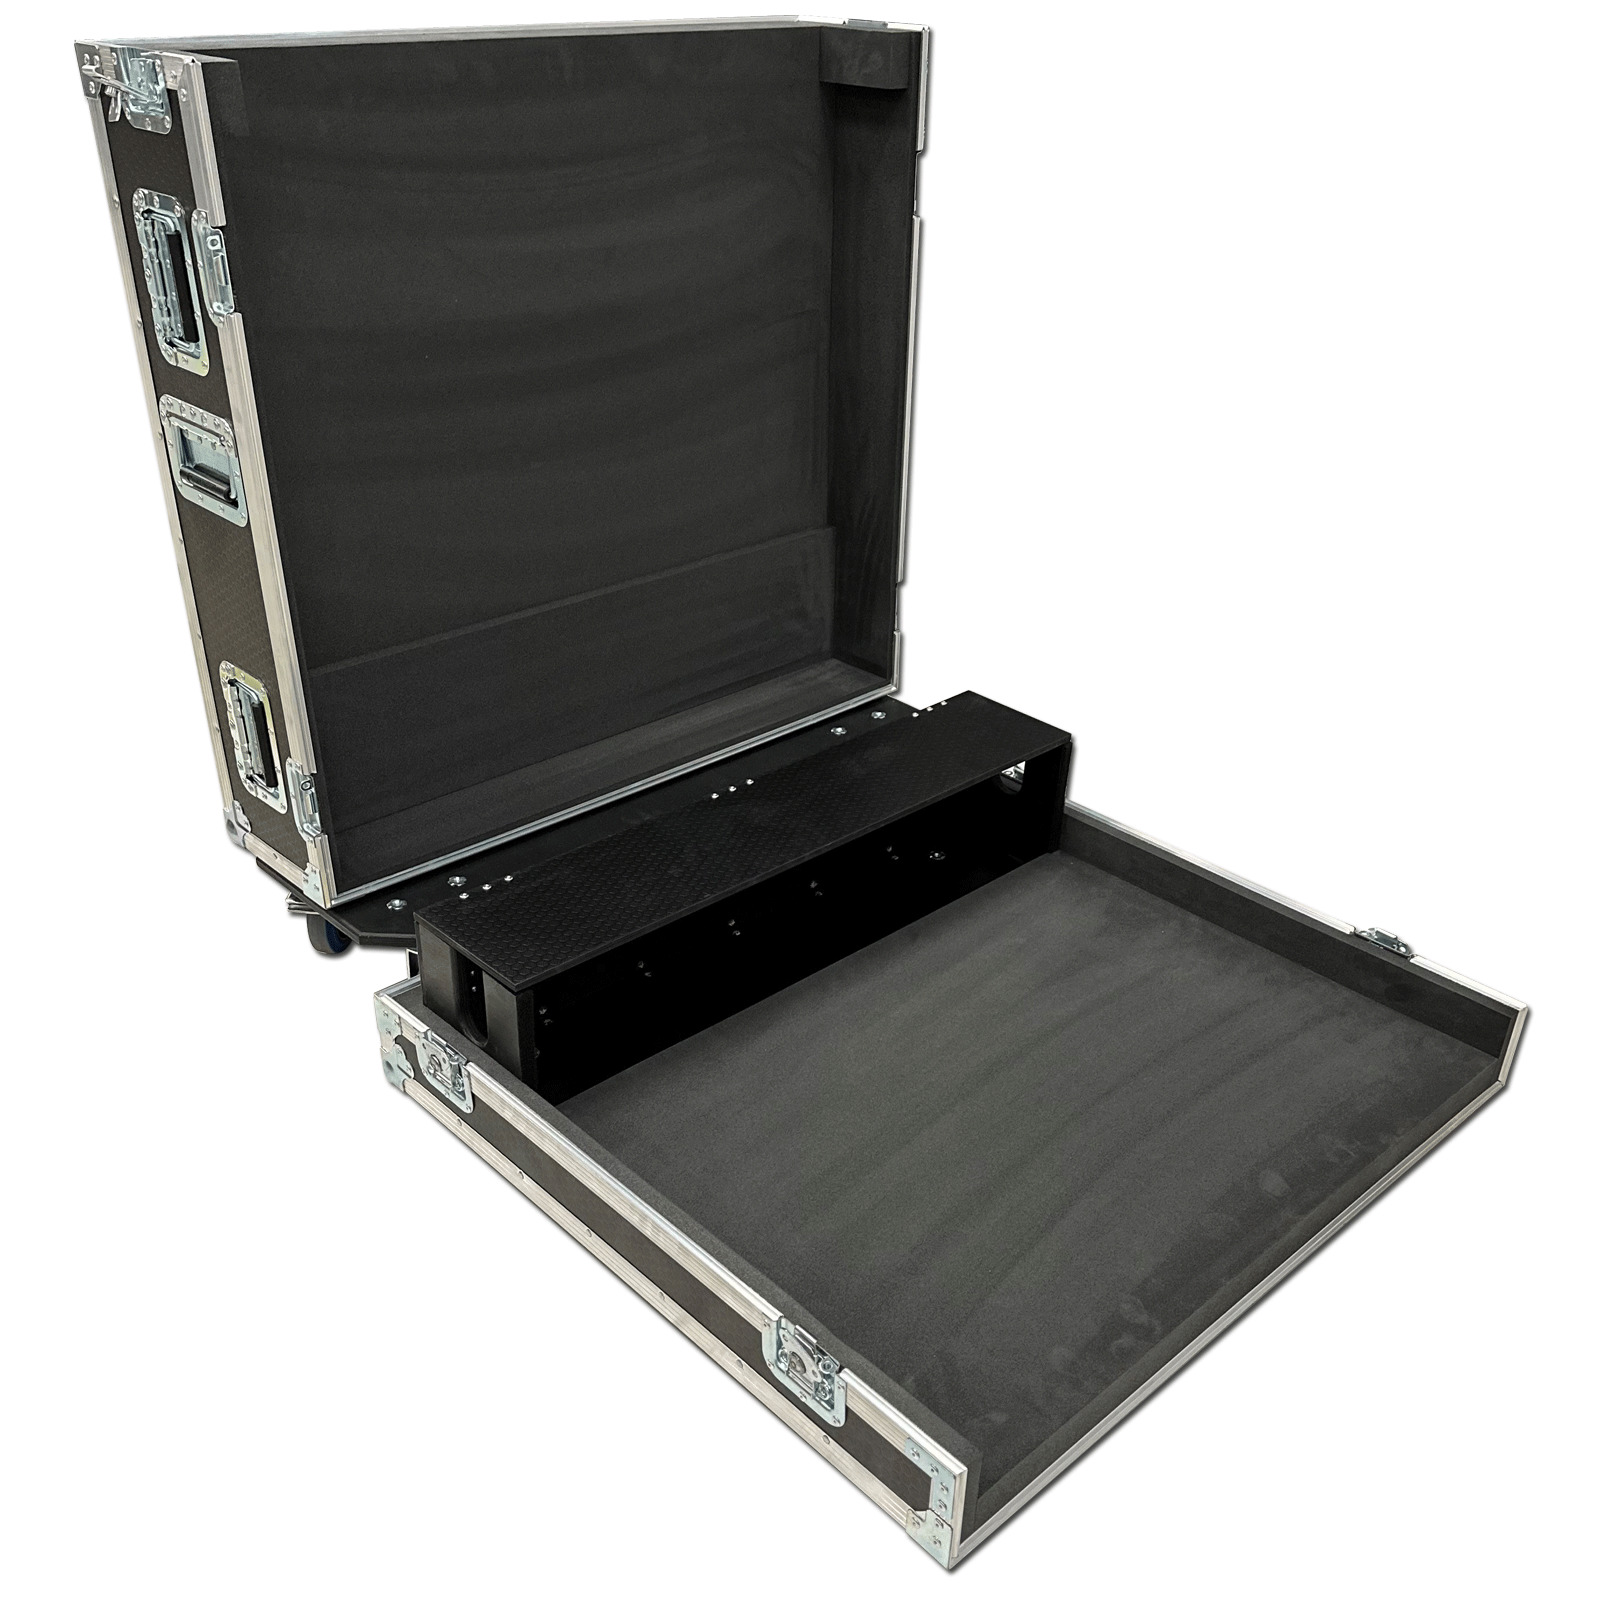 ETC Eos Apex 5 Flightcase With Dogbox And Castors